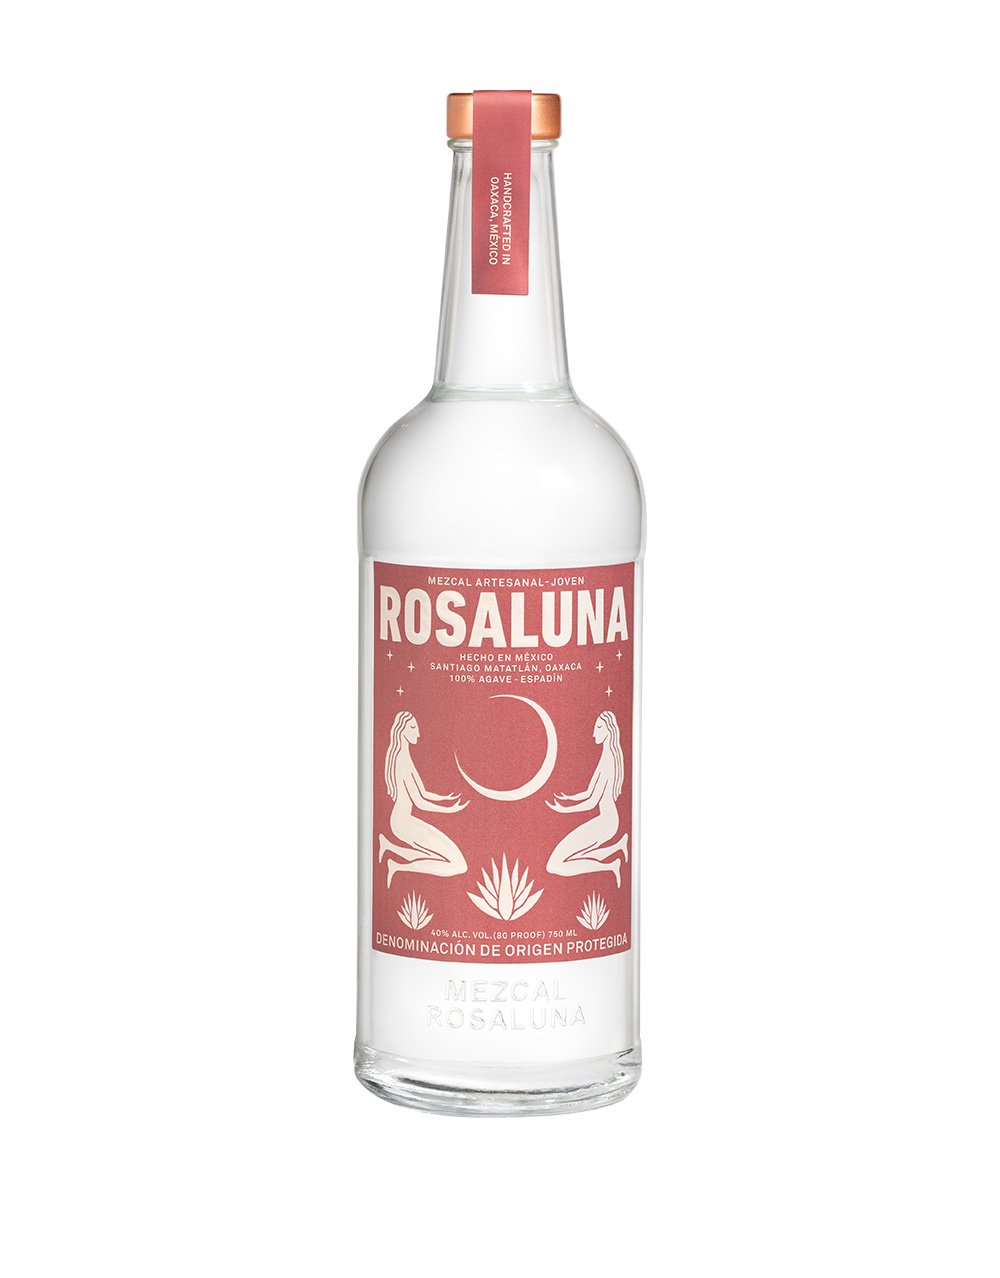 Rosaluna Artesanal Mezcal Joven (Espadín) bottle